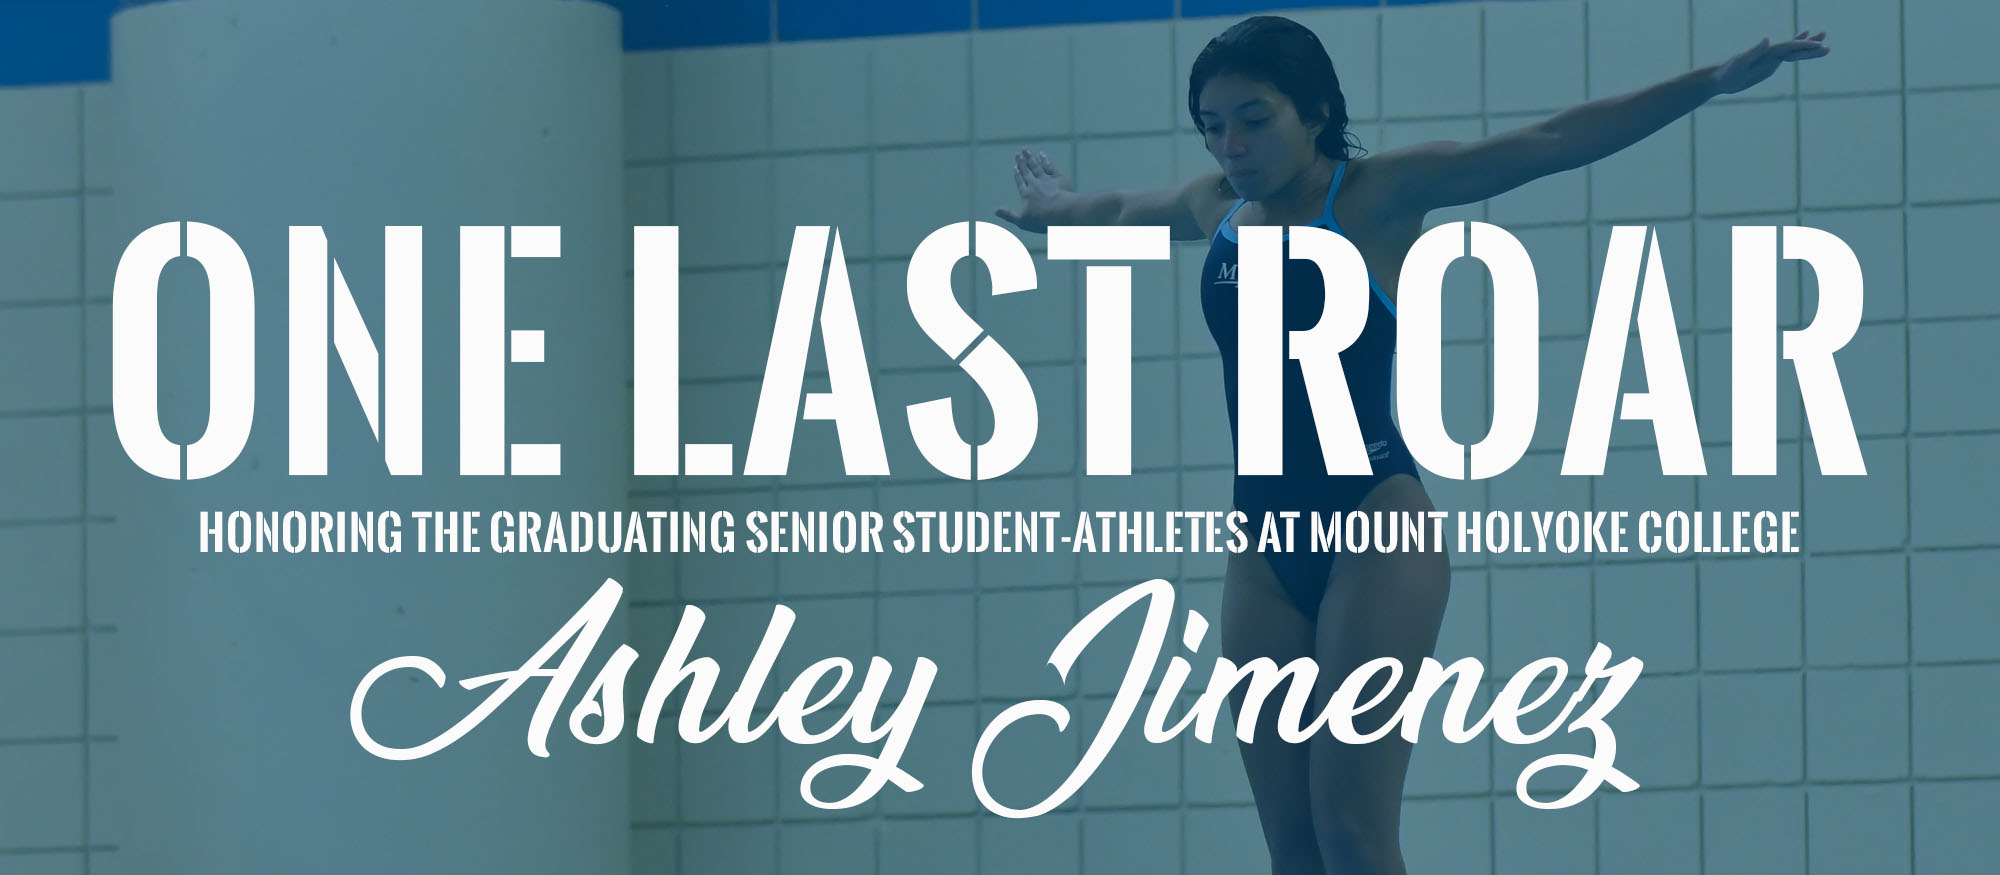 One Last Roar: Ashley Jimenez, Swimming and Diving